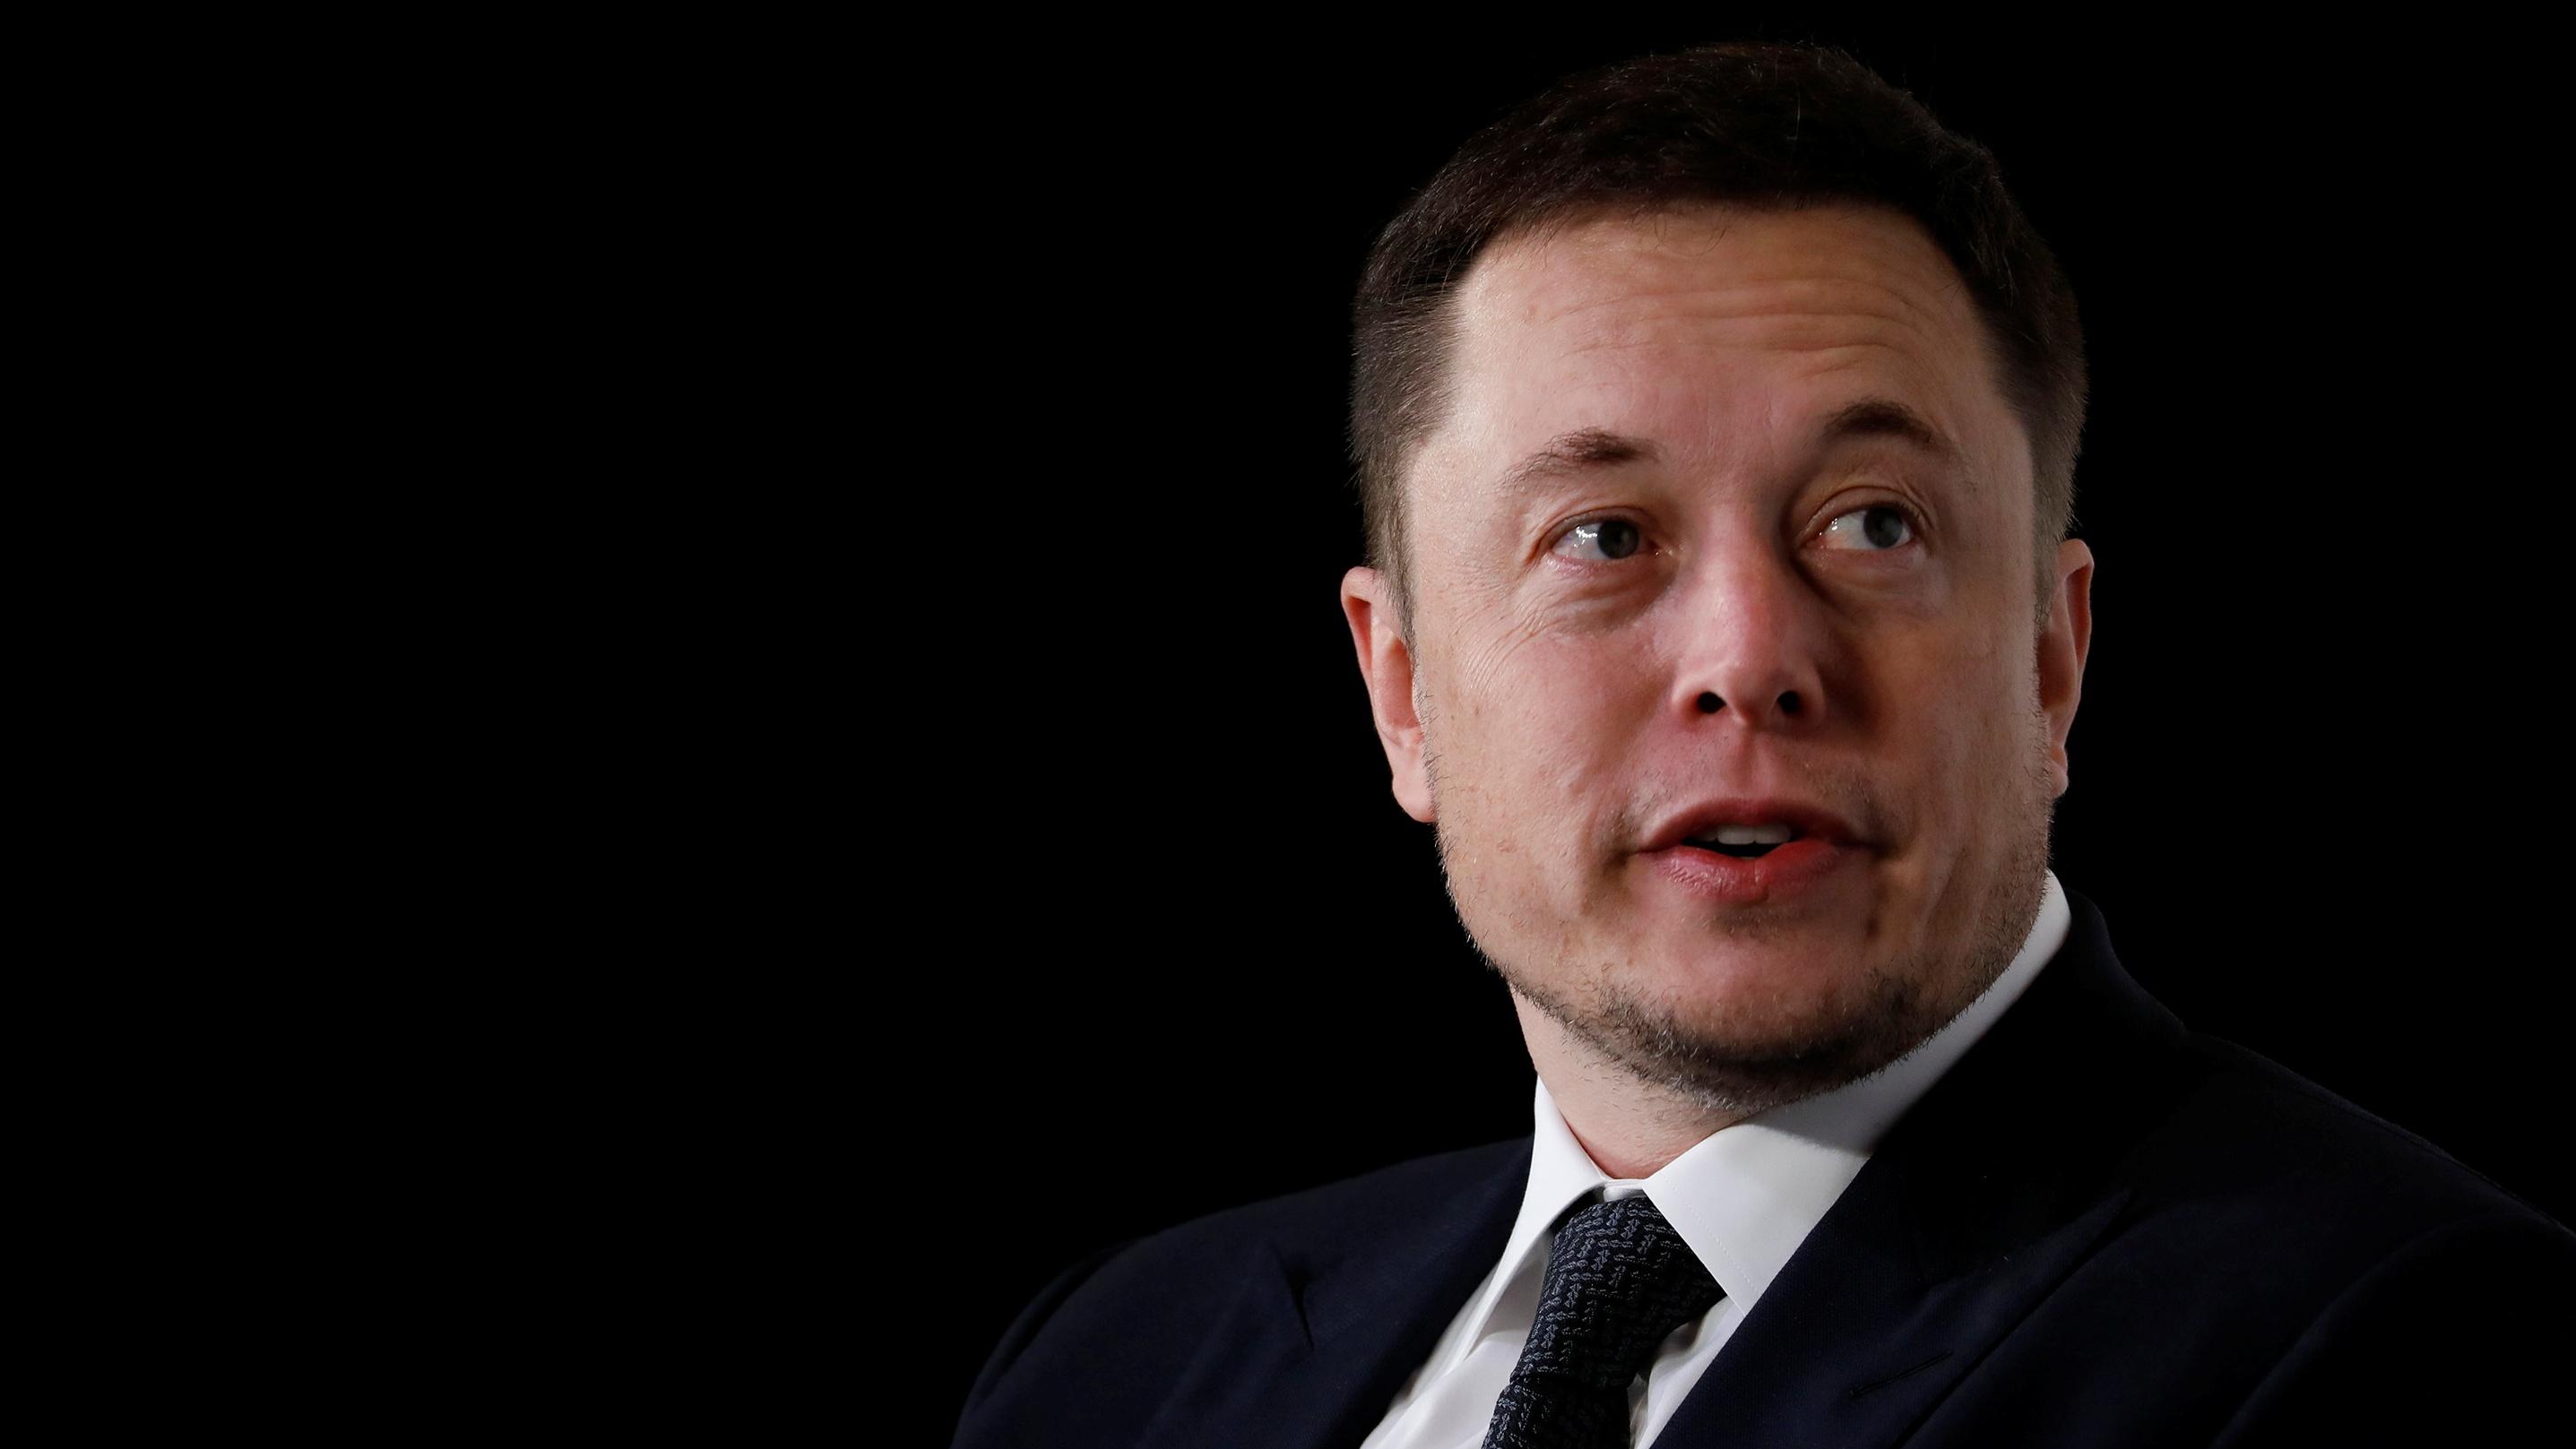 Elon Musk Wallpaper You Need Motivation Don T Do